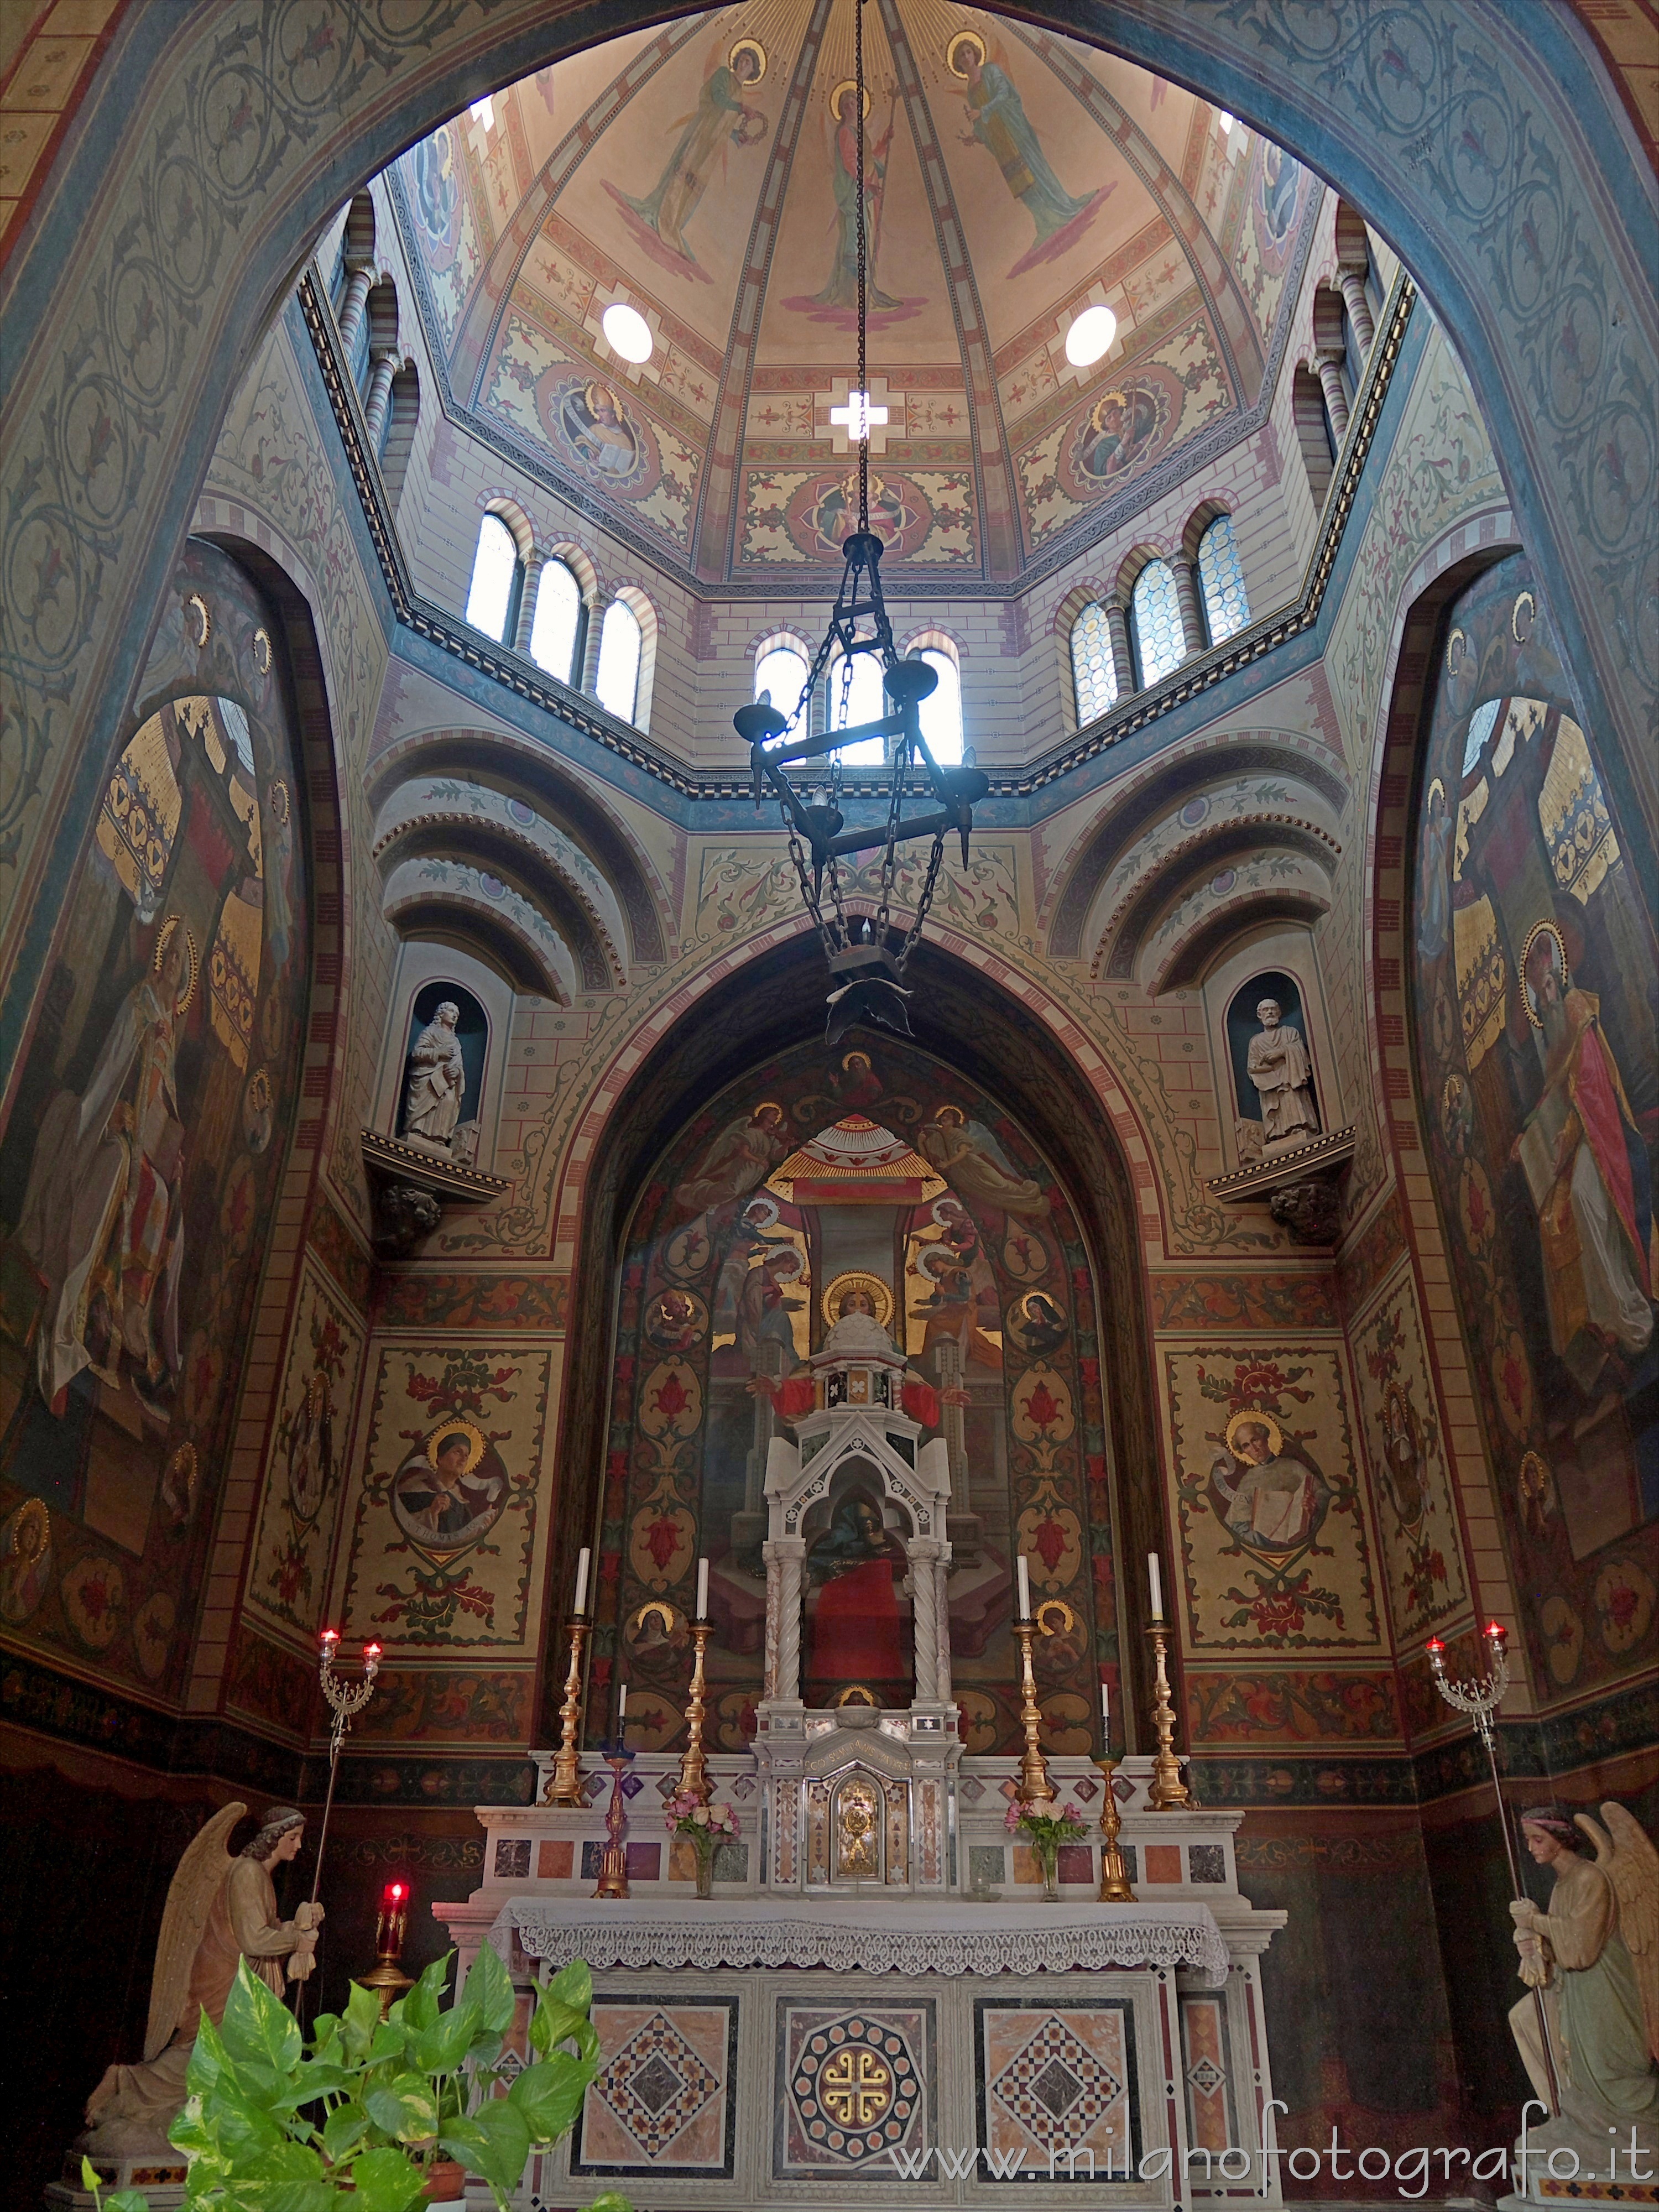 Osimo (Ancona, Italy): Chapel of the Sacrament inside the Cathedral of San Leopardo - Osimo (Ancona, Italy)